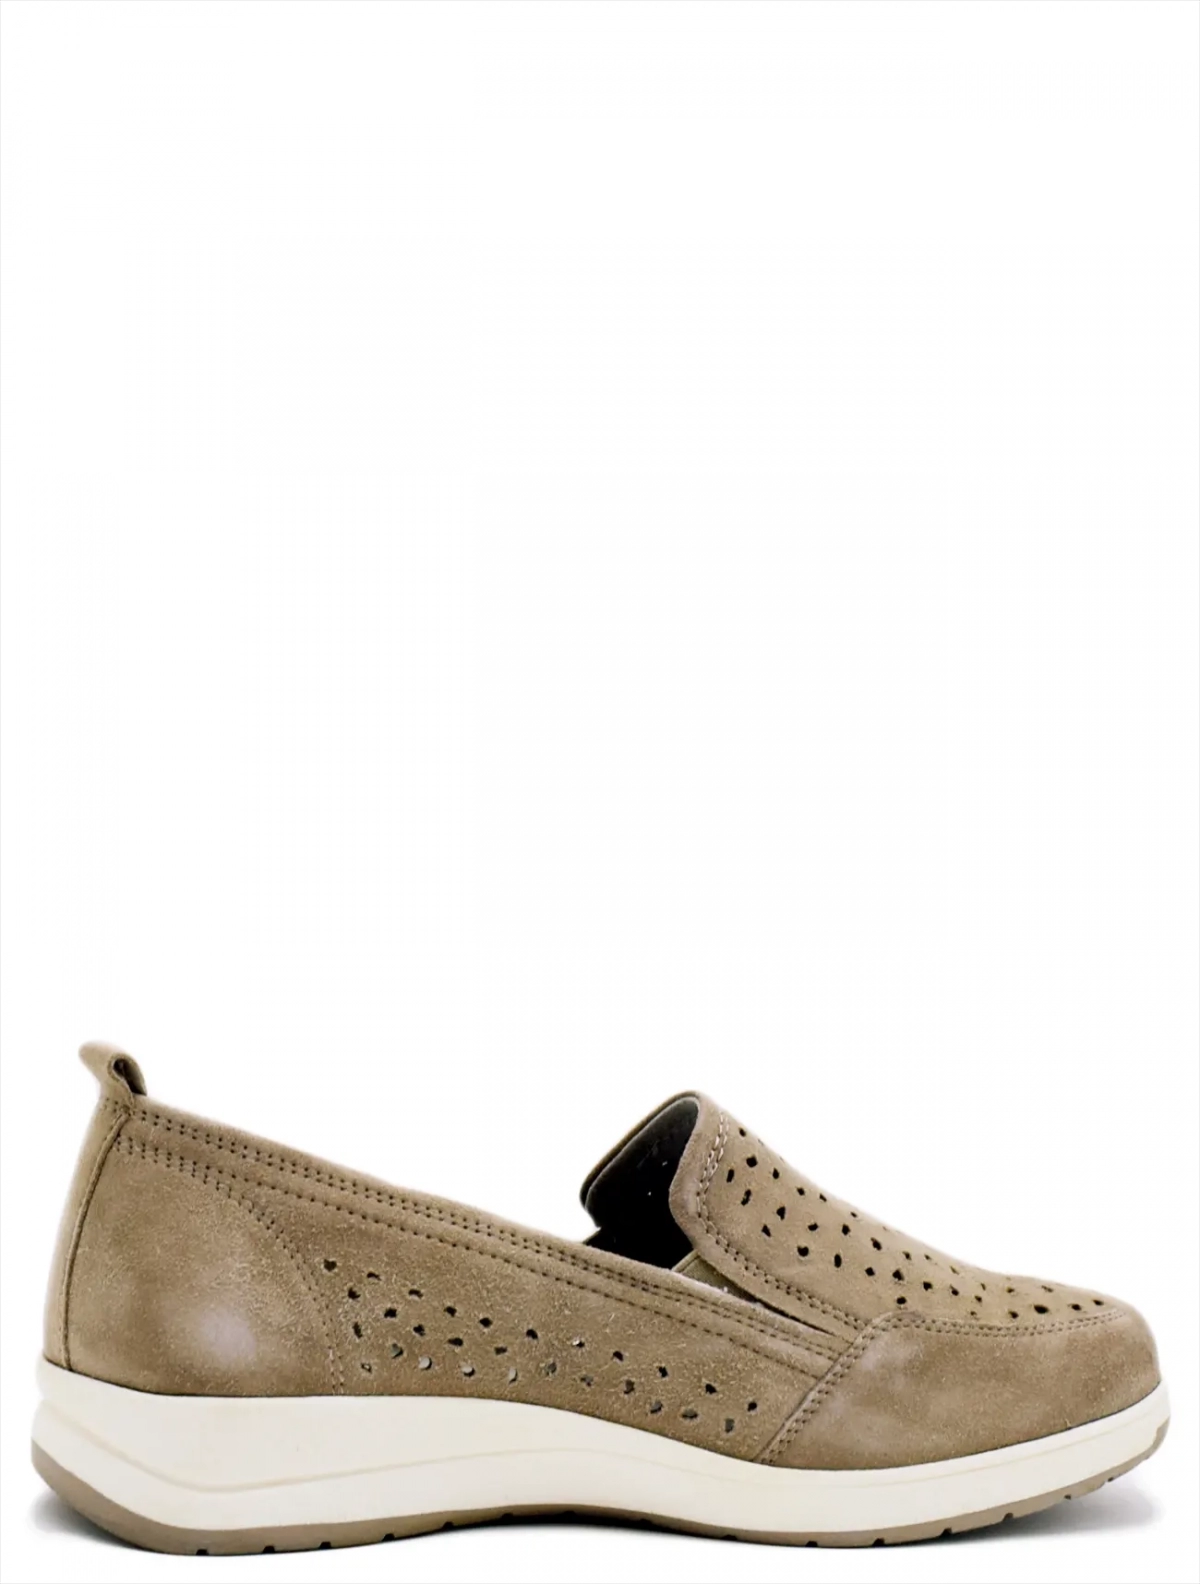 Caprice 9-24760-20-343 женские туфли